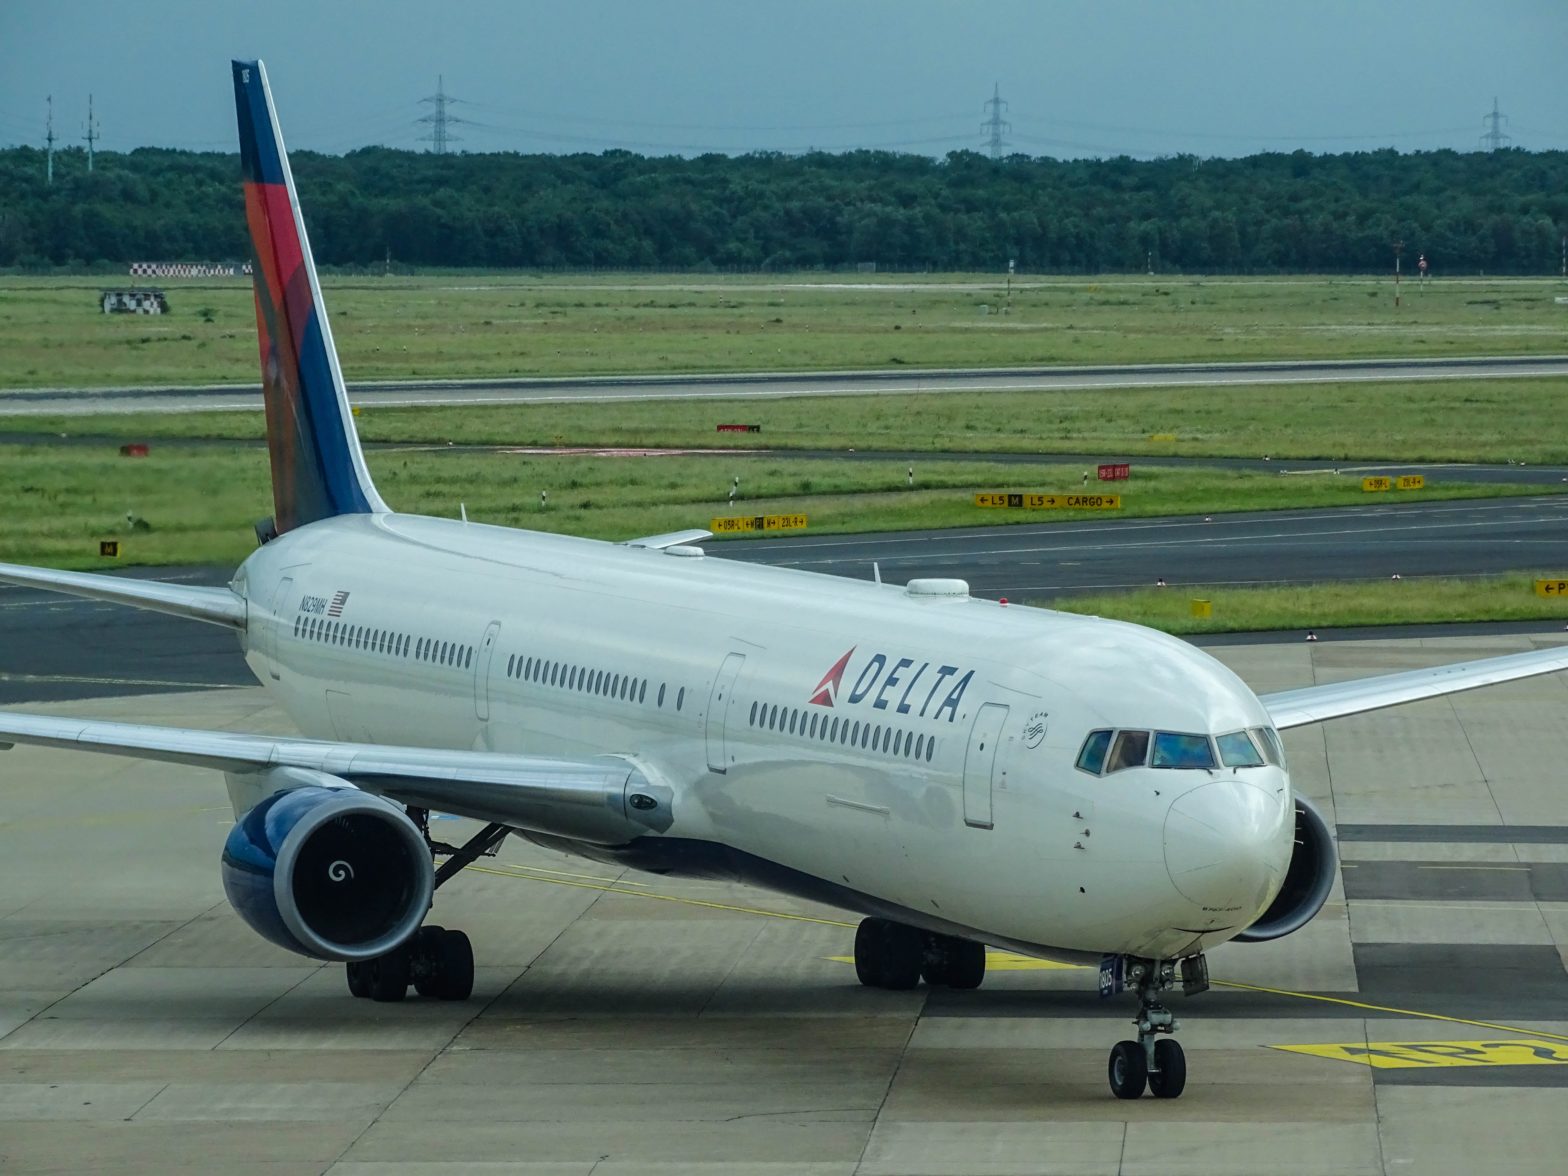 Black Man Denied Access To Plane, Accuses Delta Of Racial Discrimination